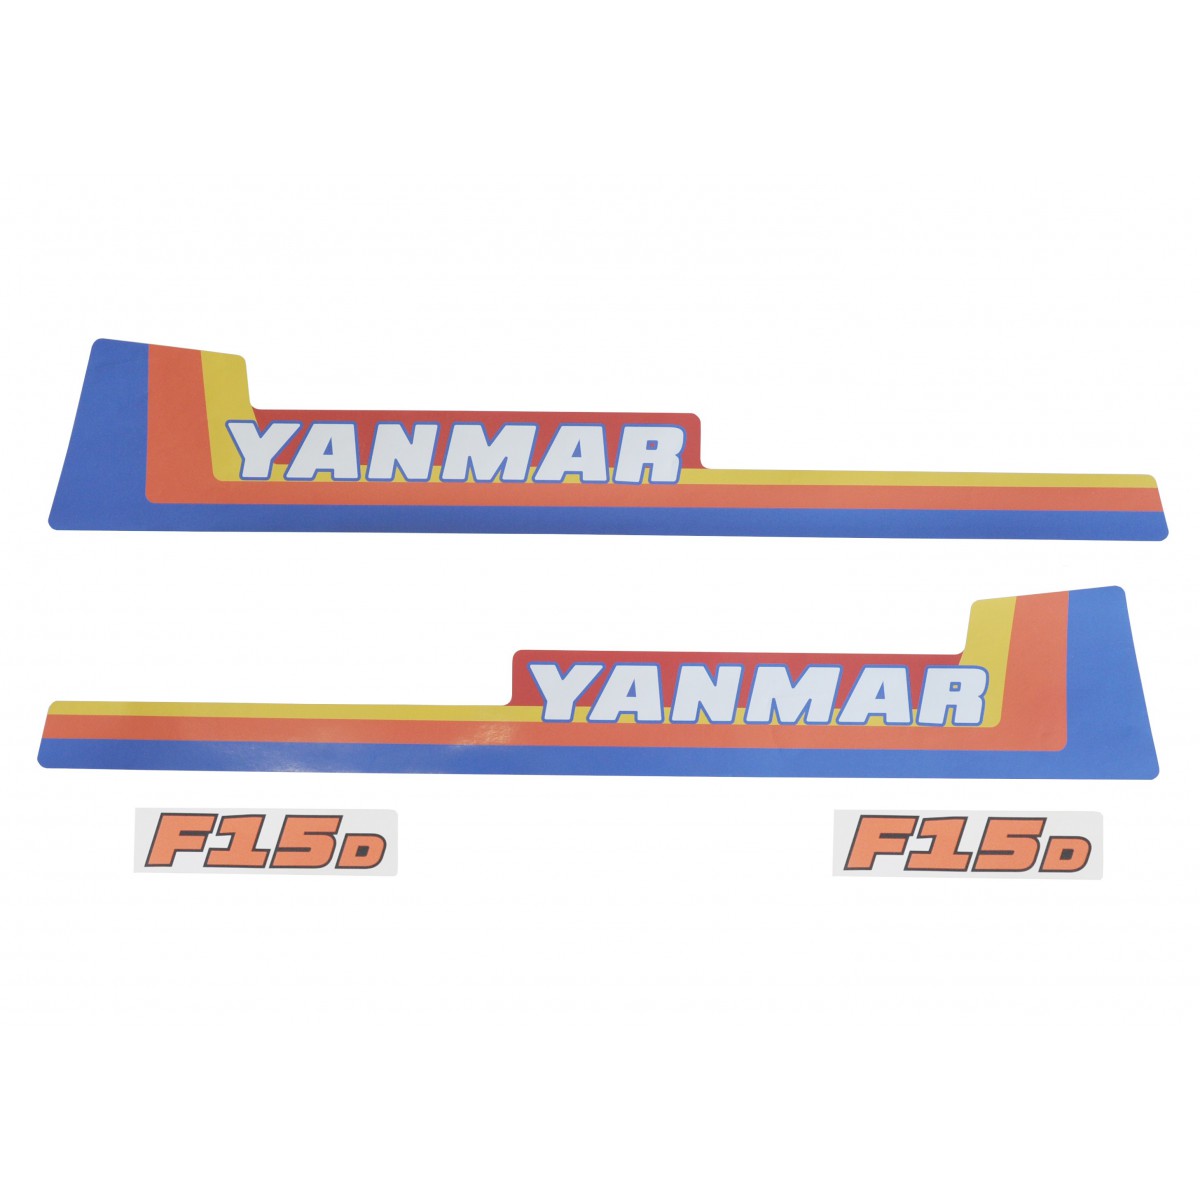 Calcas Yanmar F15D